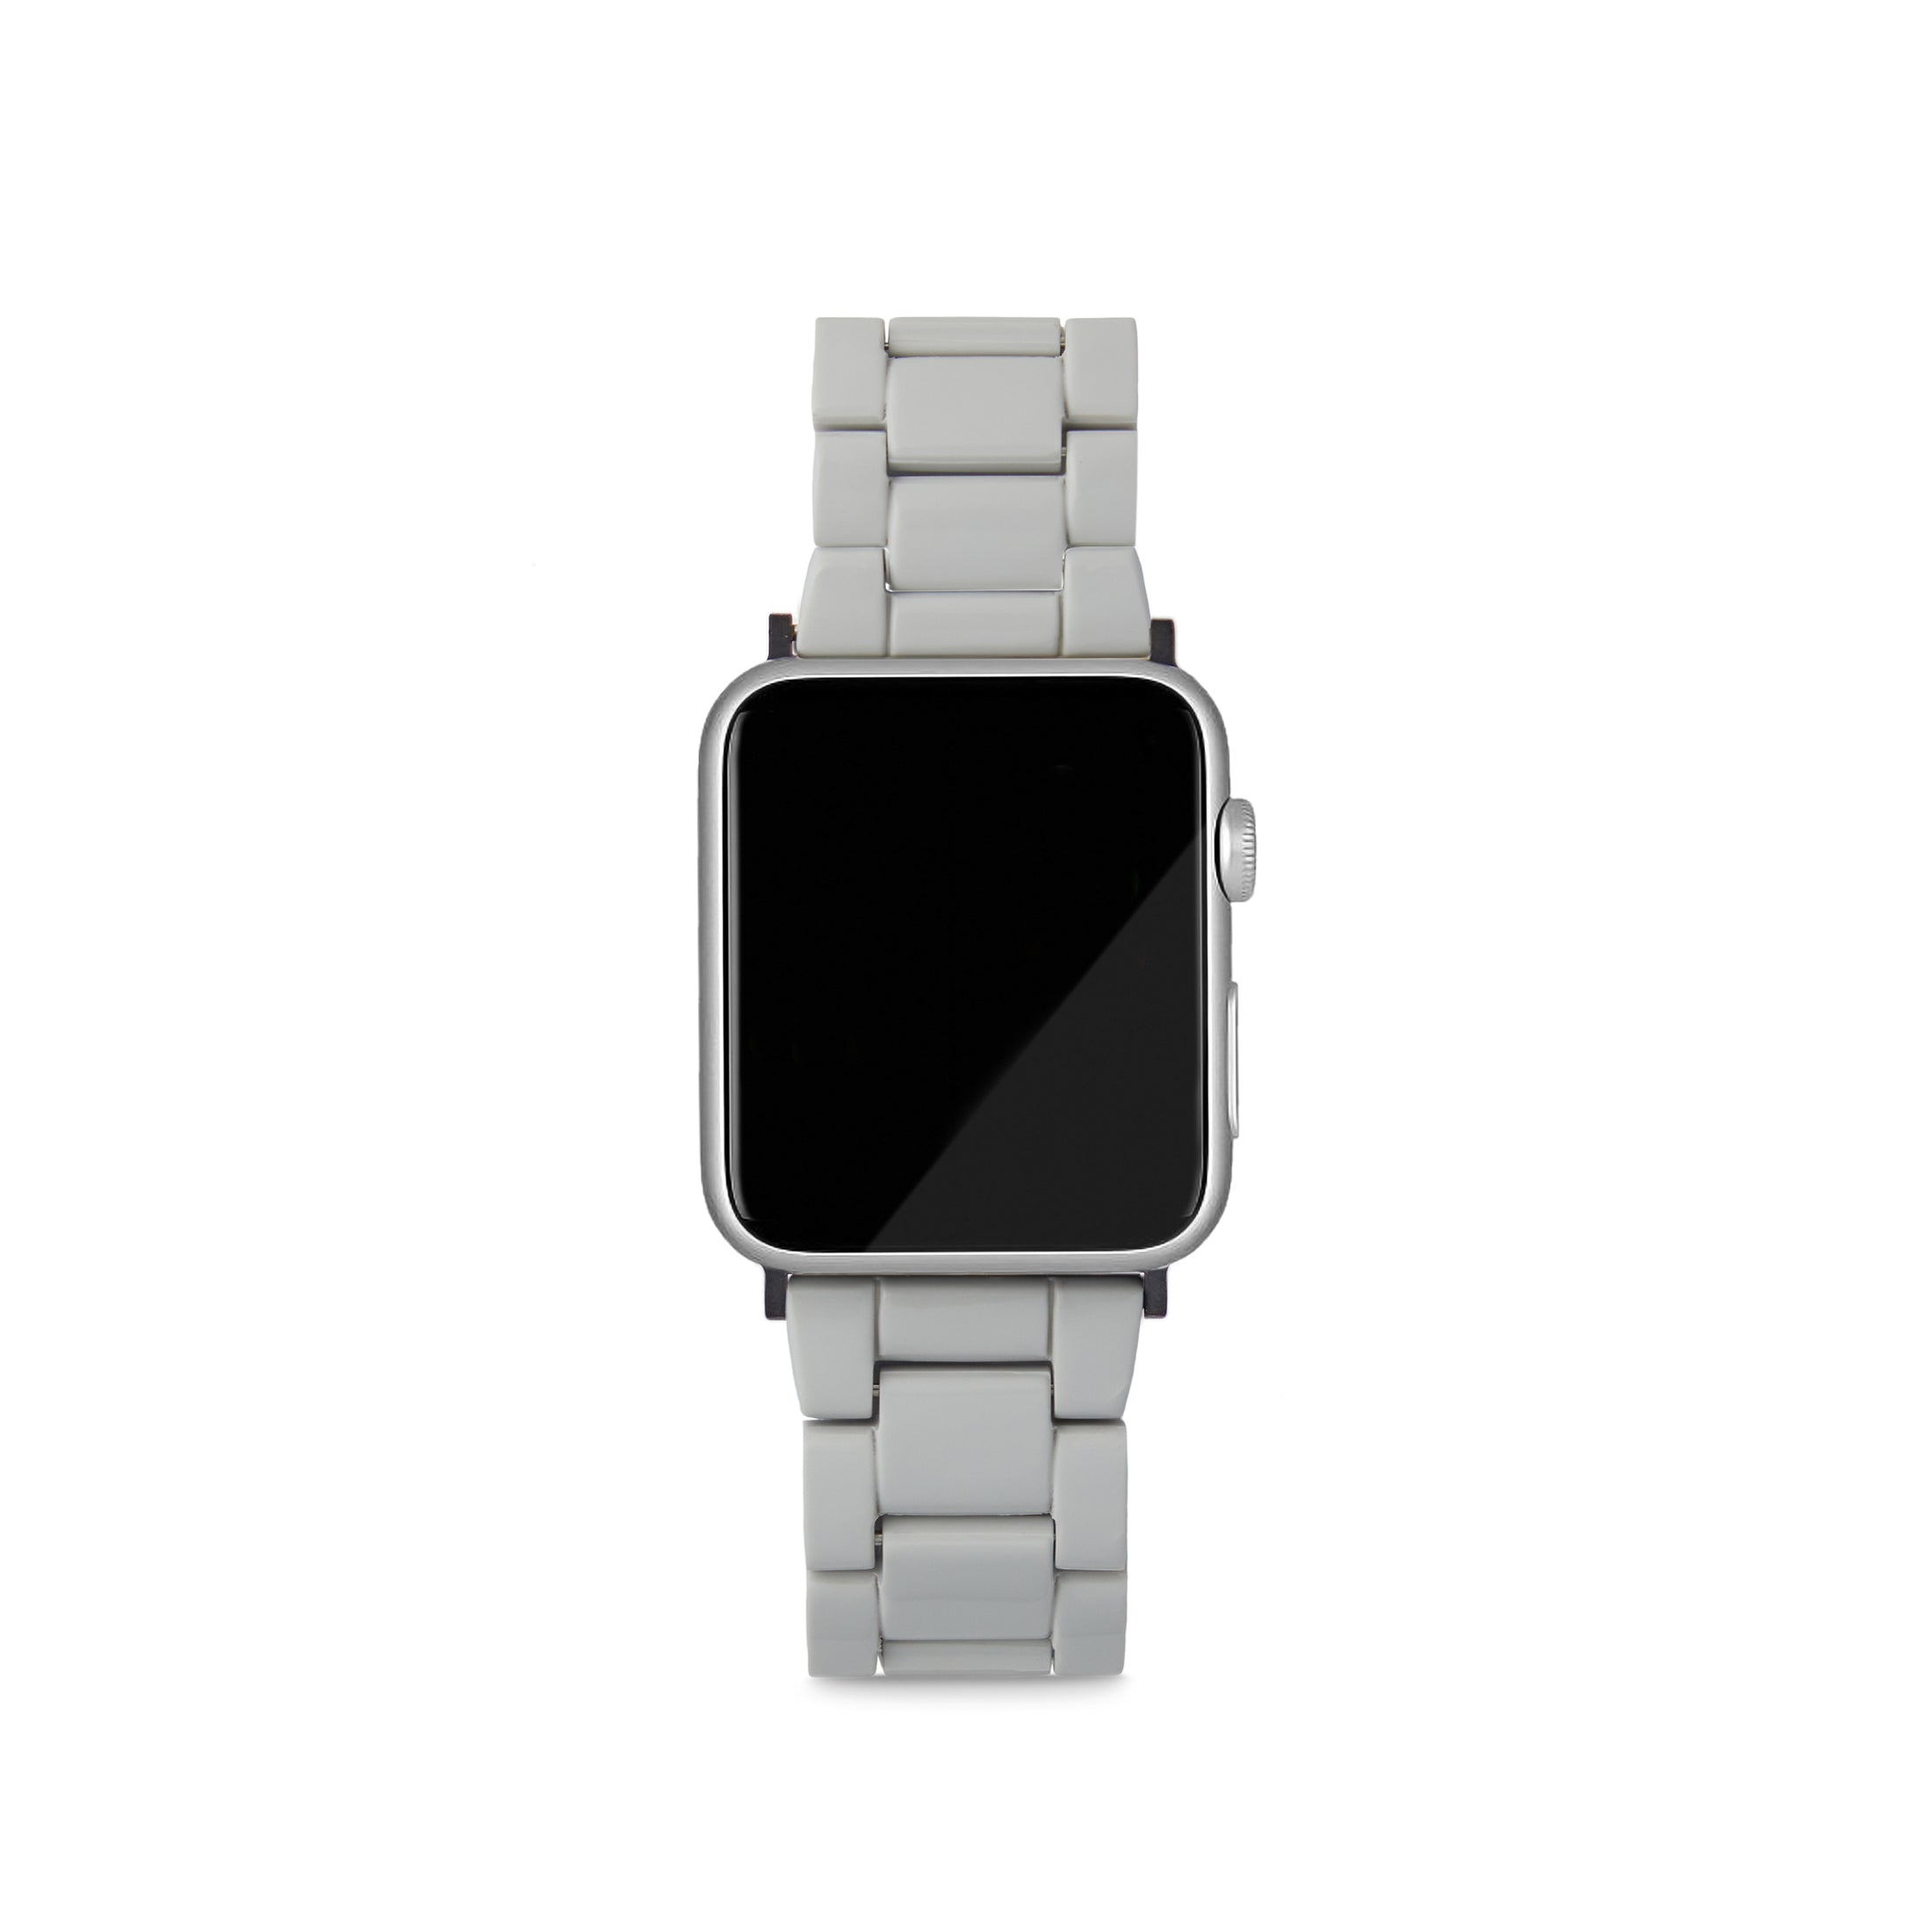 Apple Watch Band in Light Grey | Machete Jewelry – MACHETE